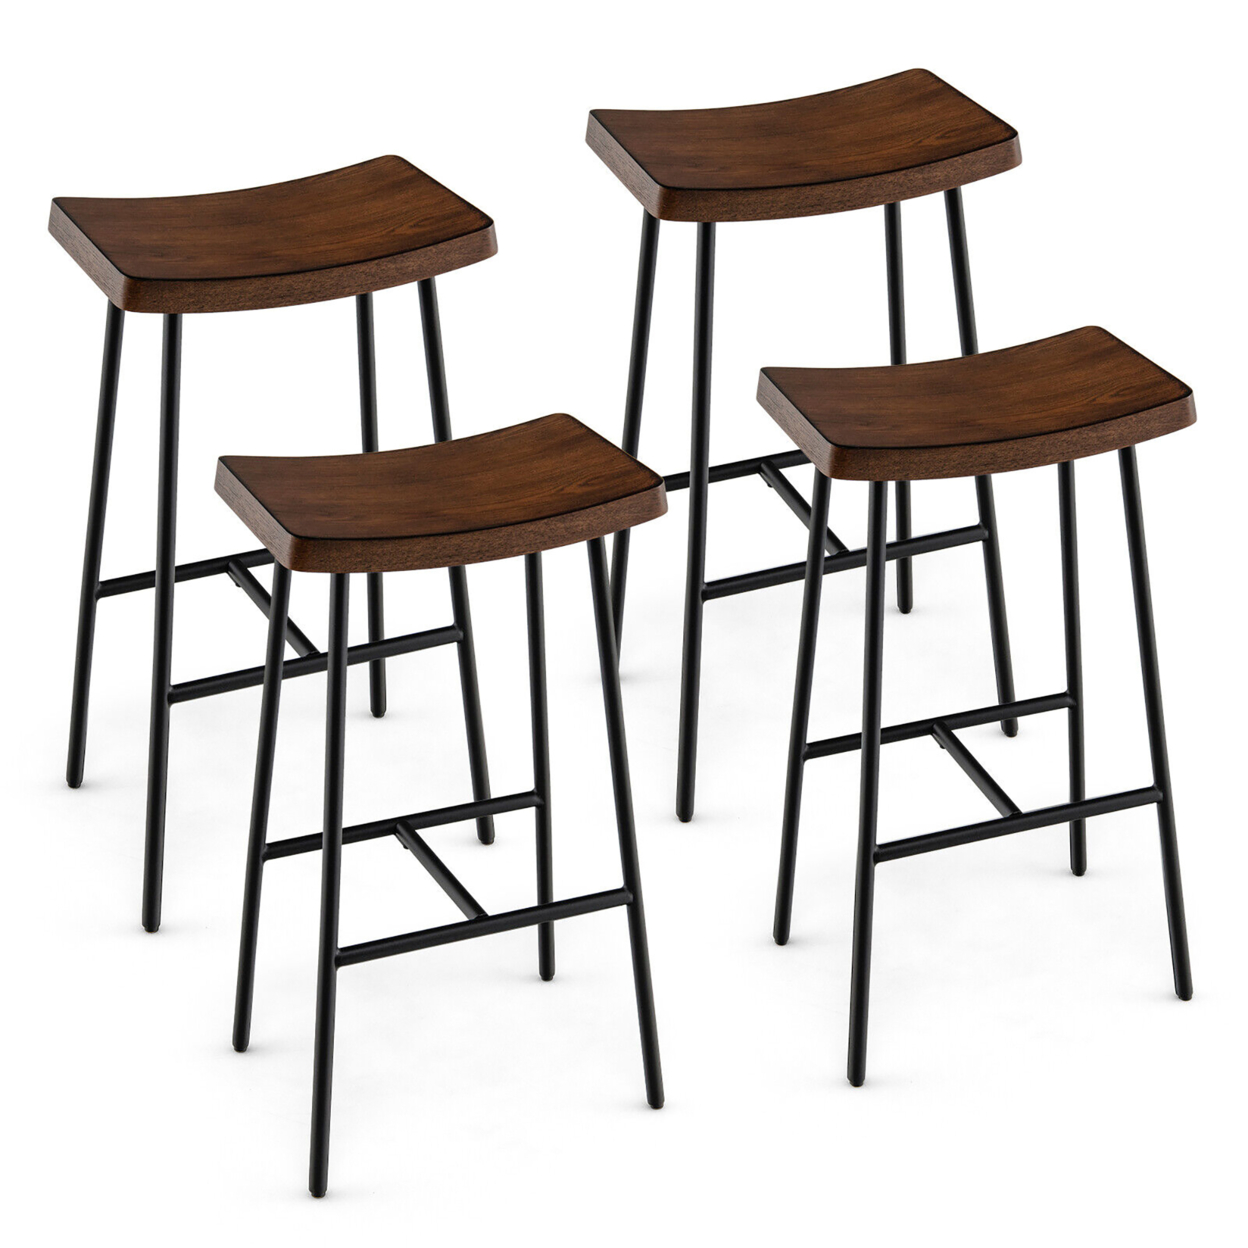 Set Of 4 Industrial Saddle Stool Bar Height Chair Bar Stool W/ Metal Frame